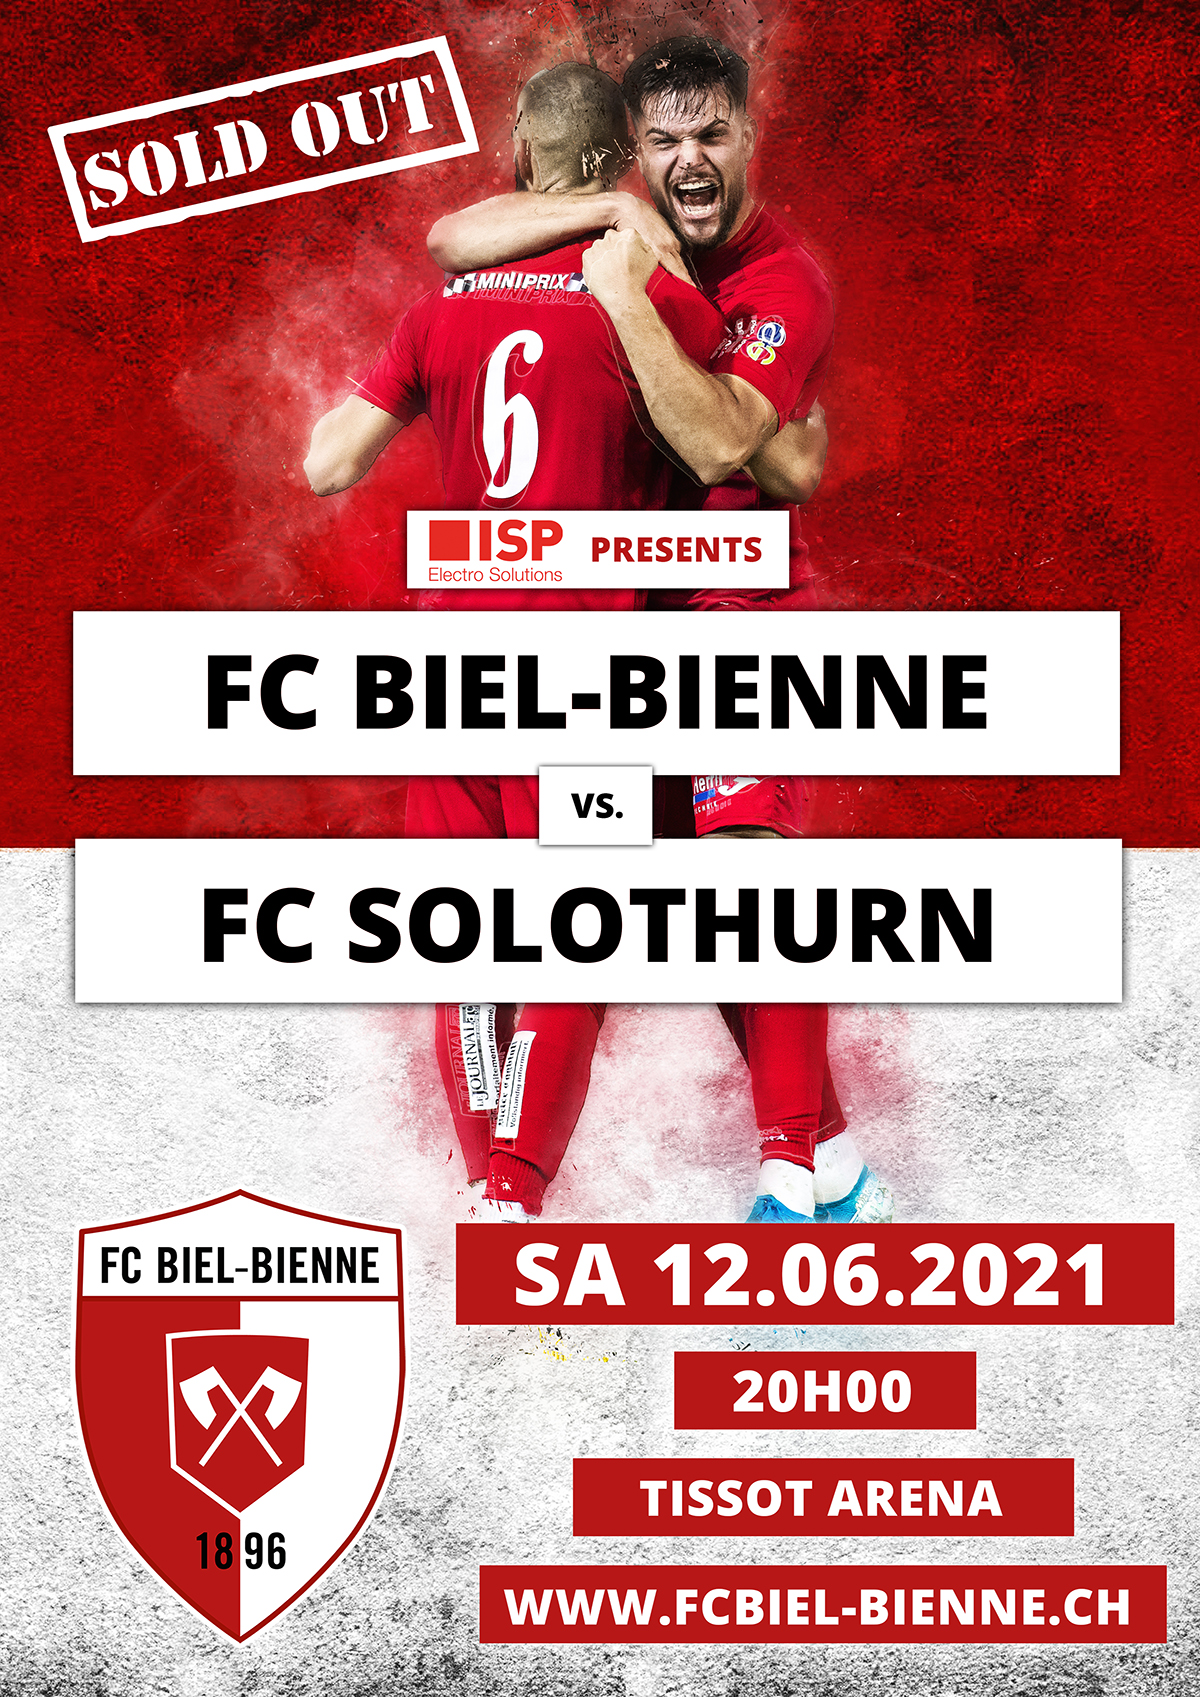 FC Biel-Bienne vs. FC Soleure